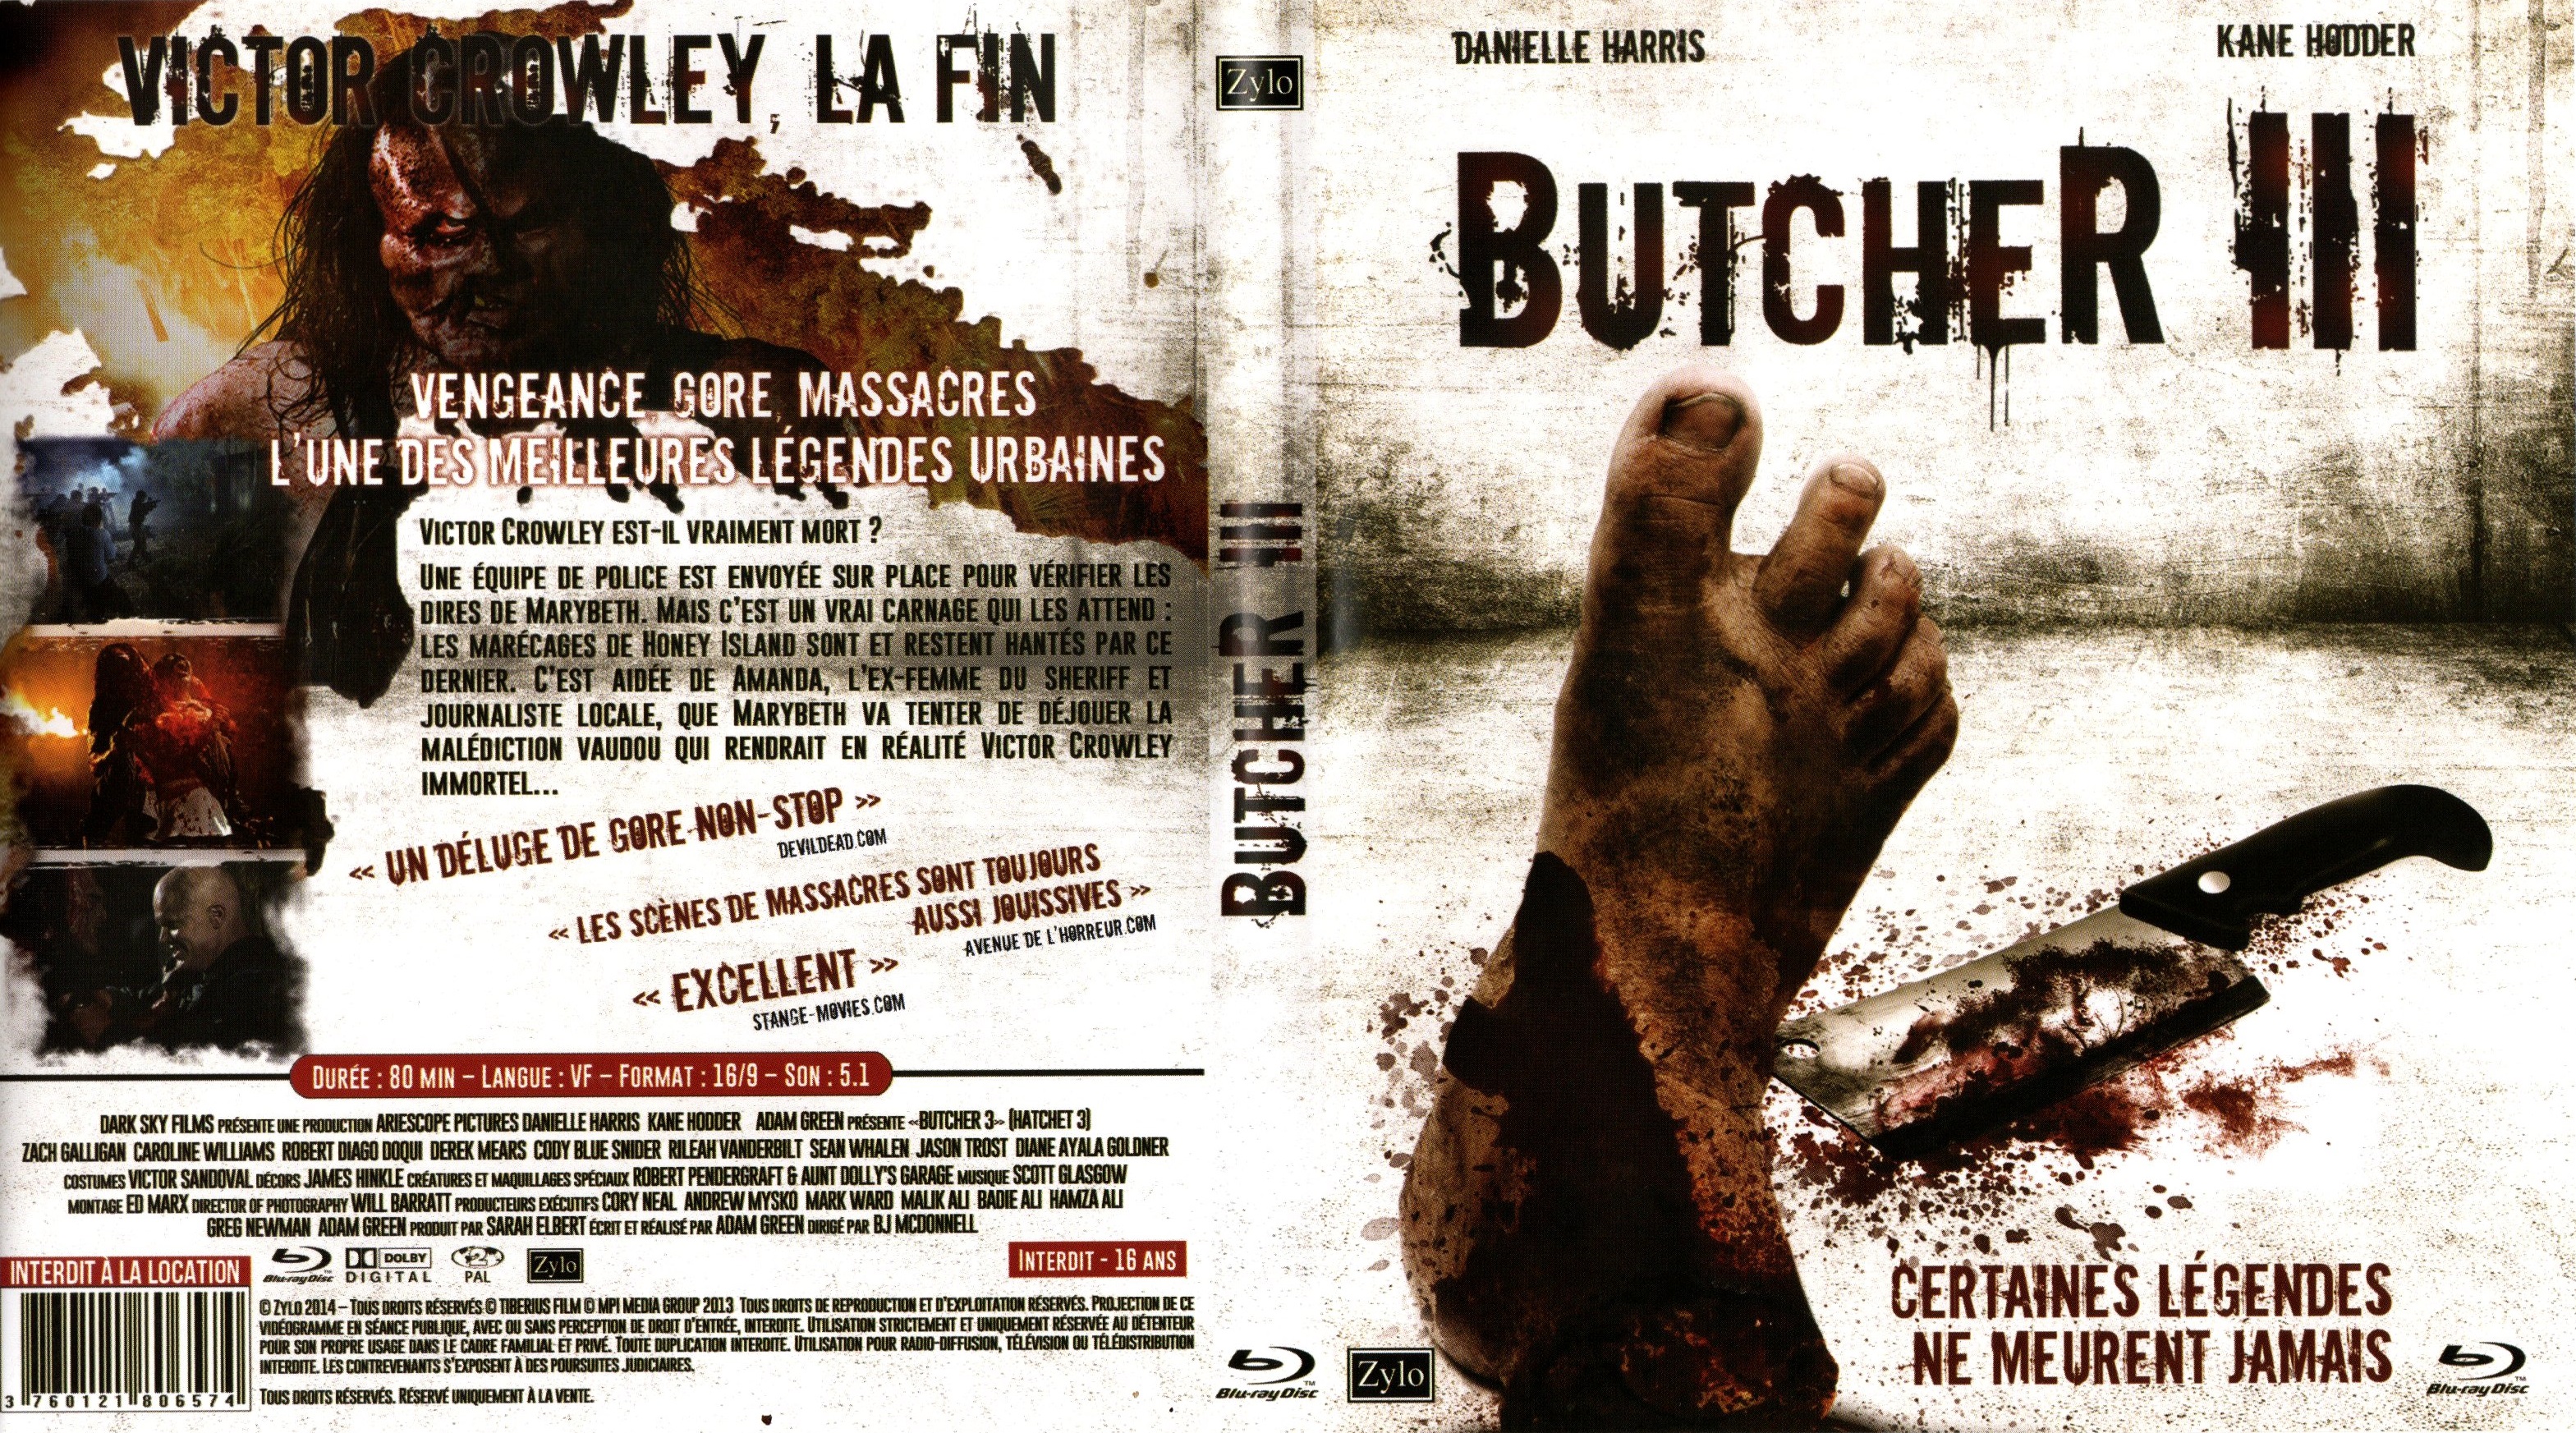 Jaquette DVD Butcher 3 (BLU-RAY)